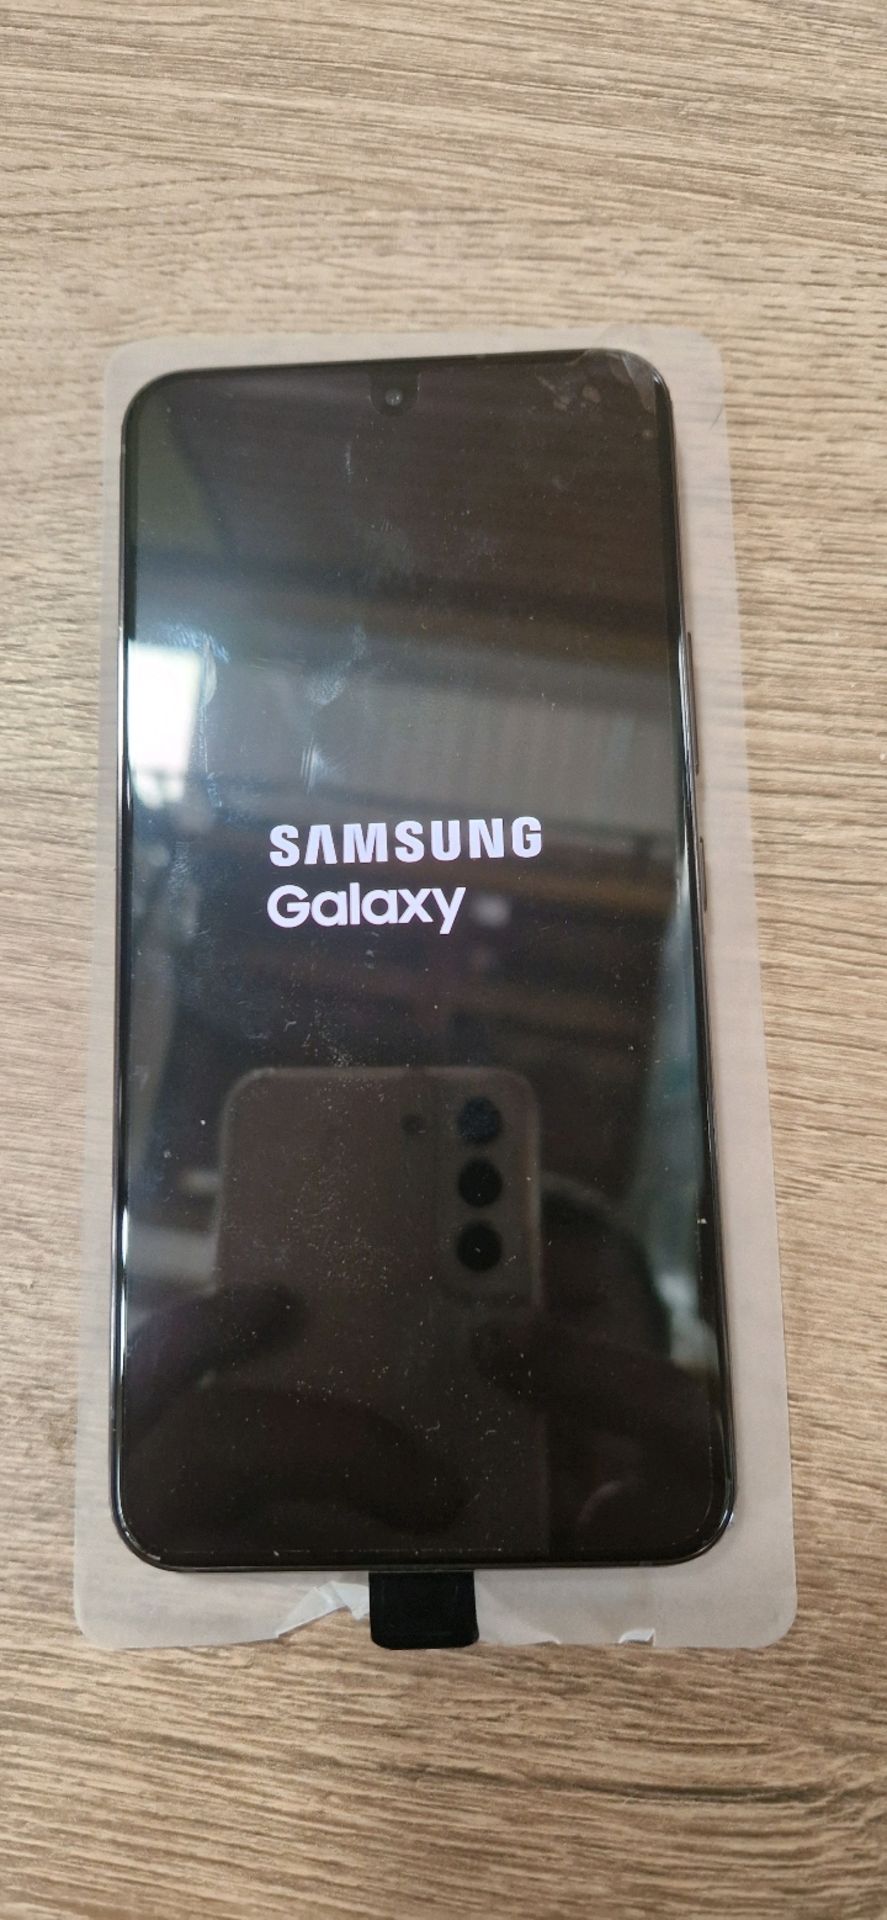 SAMSUNG GALAXY S22 5G SMARTPHONE WITH WI